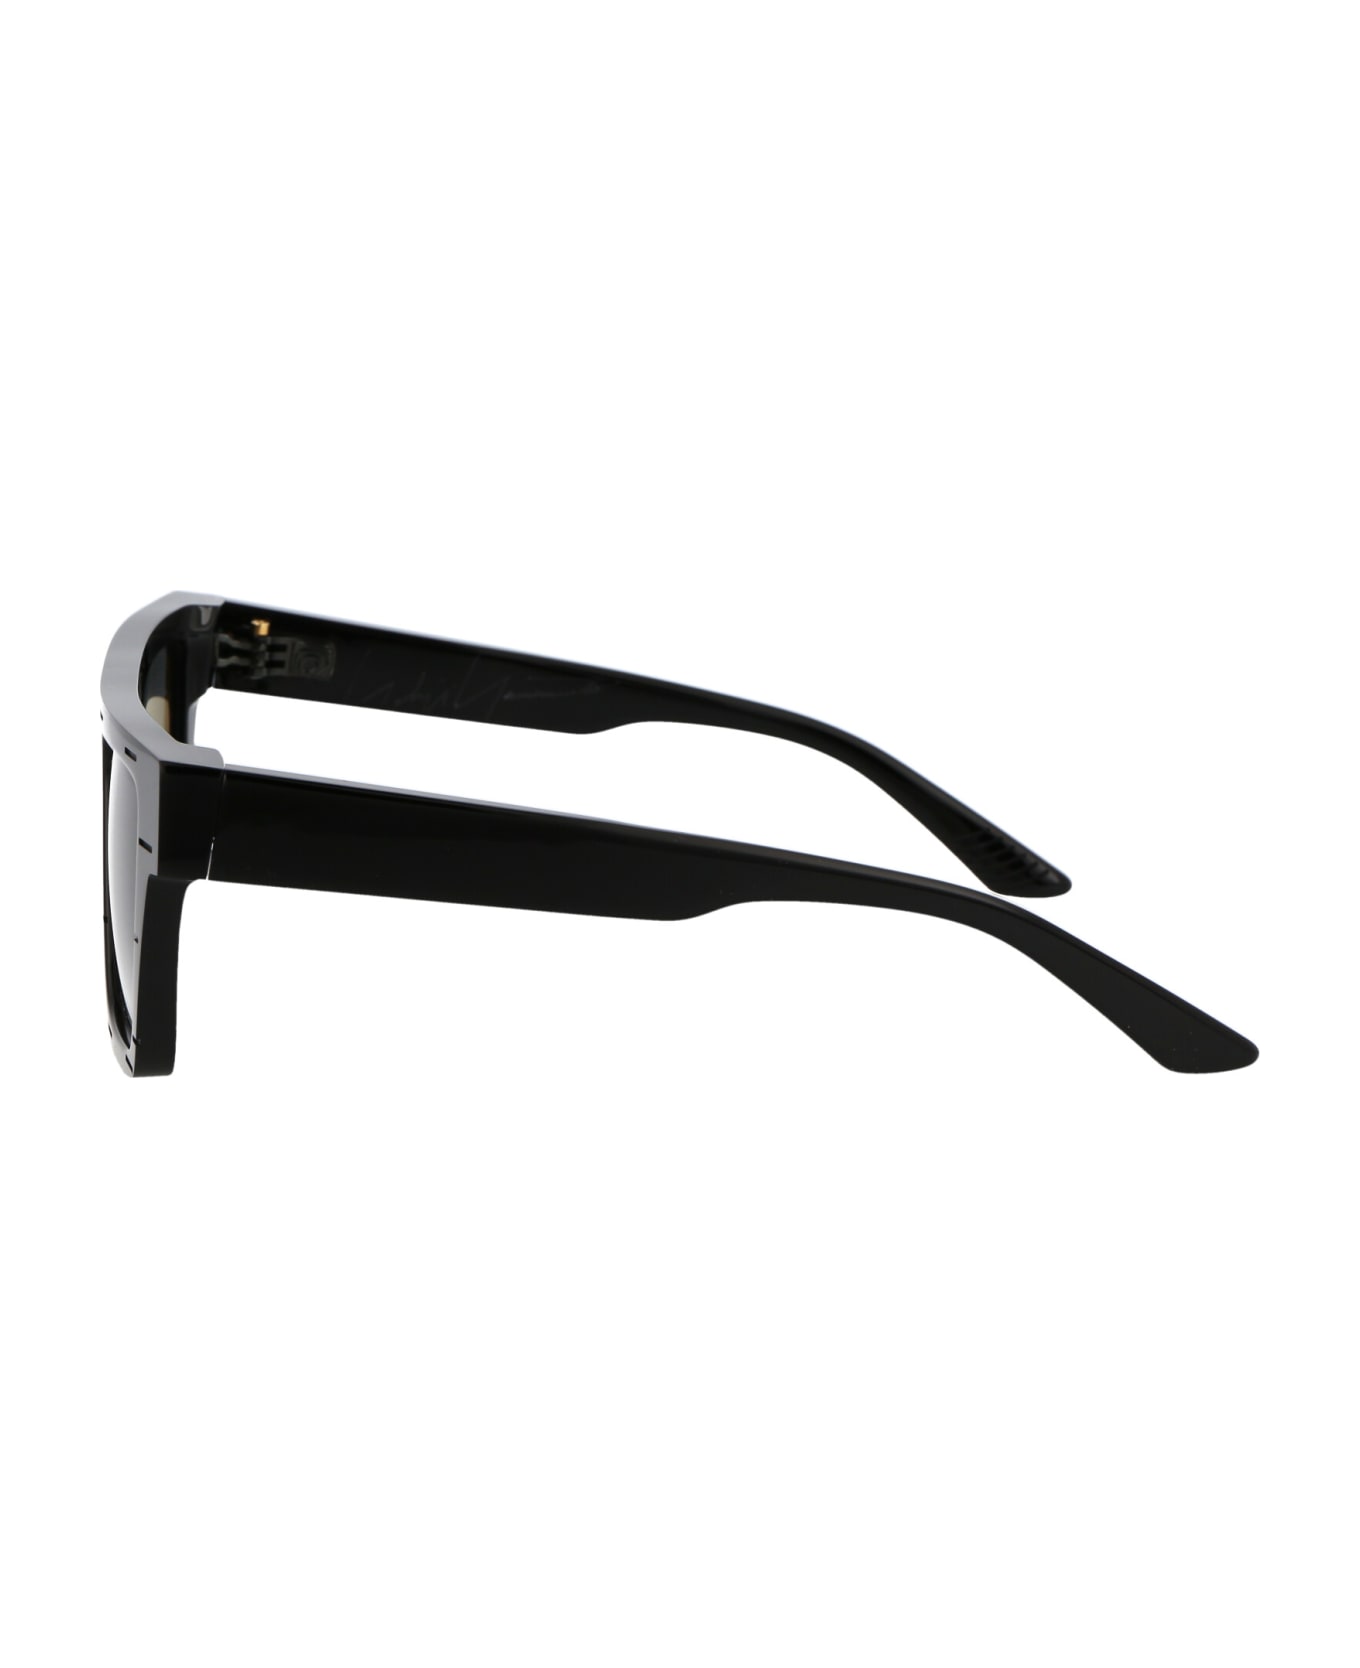 Yohji Yamamoto Slook 002 Sunglasses Dinosaur - A001 PURE BLACK/JAPAN GOLD